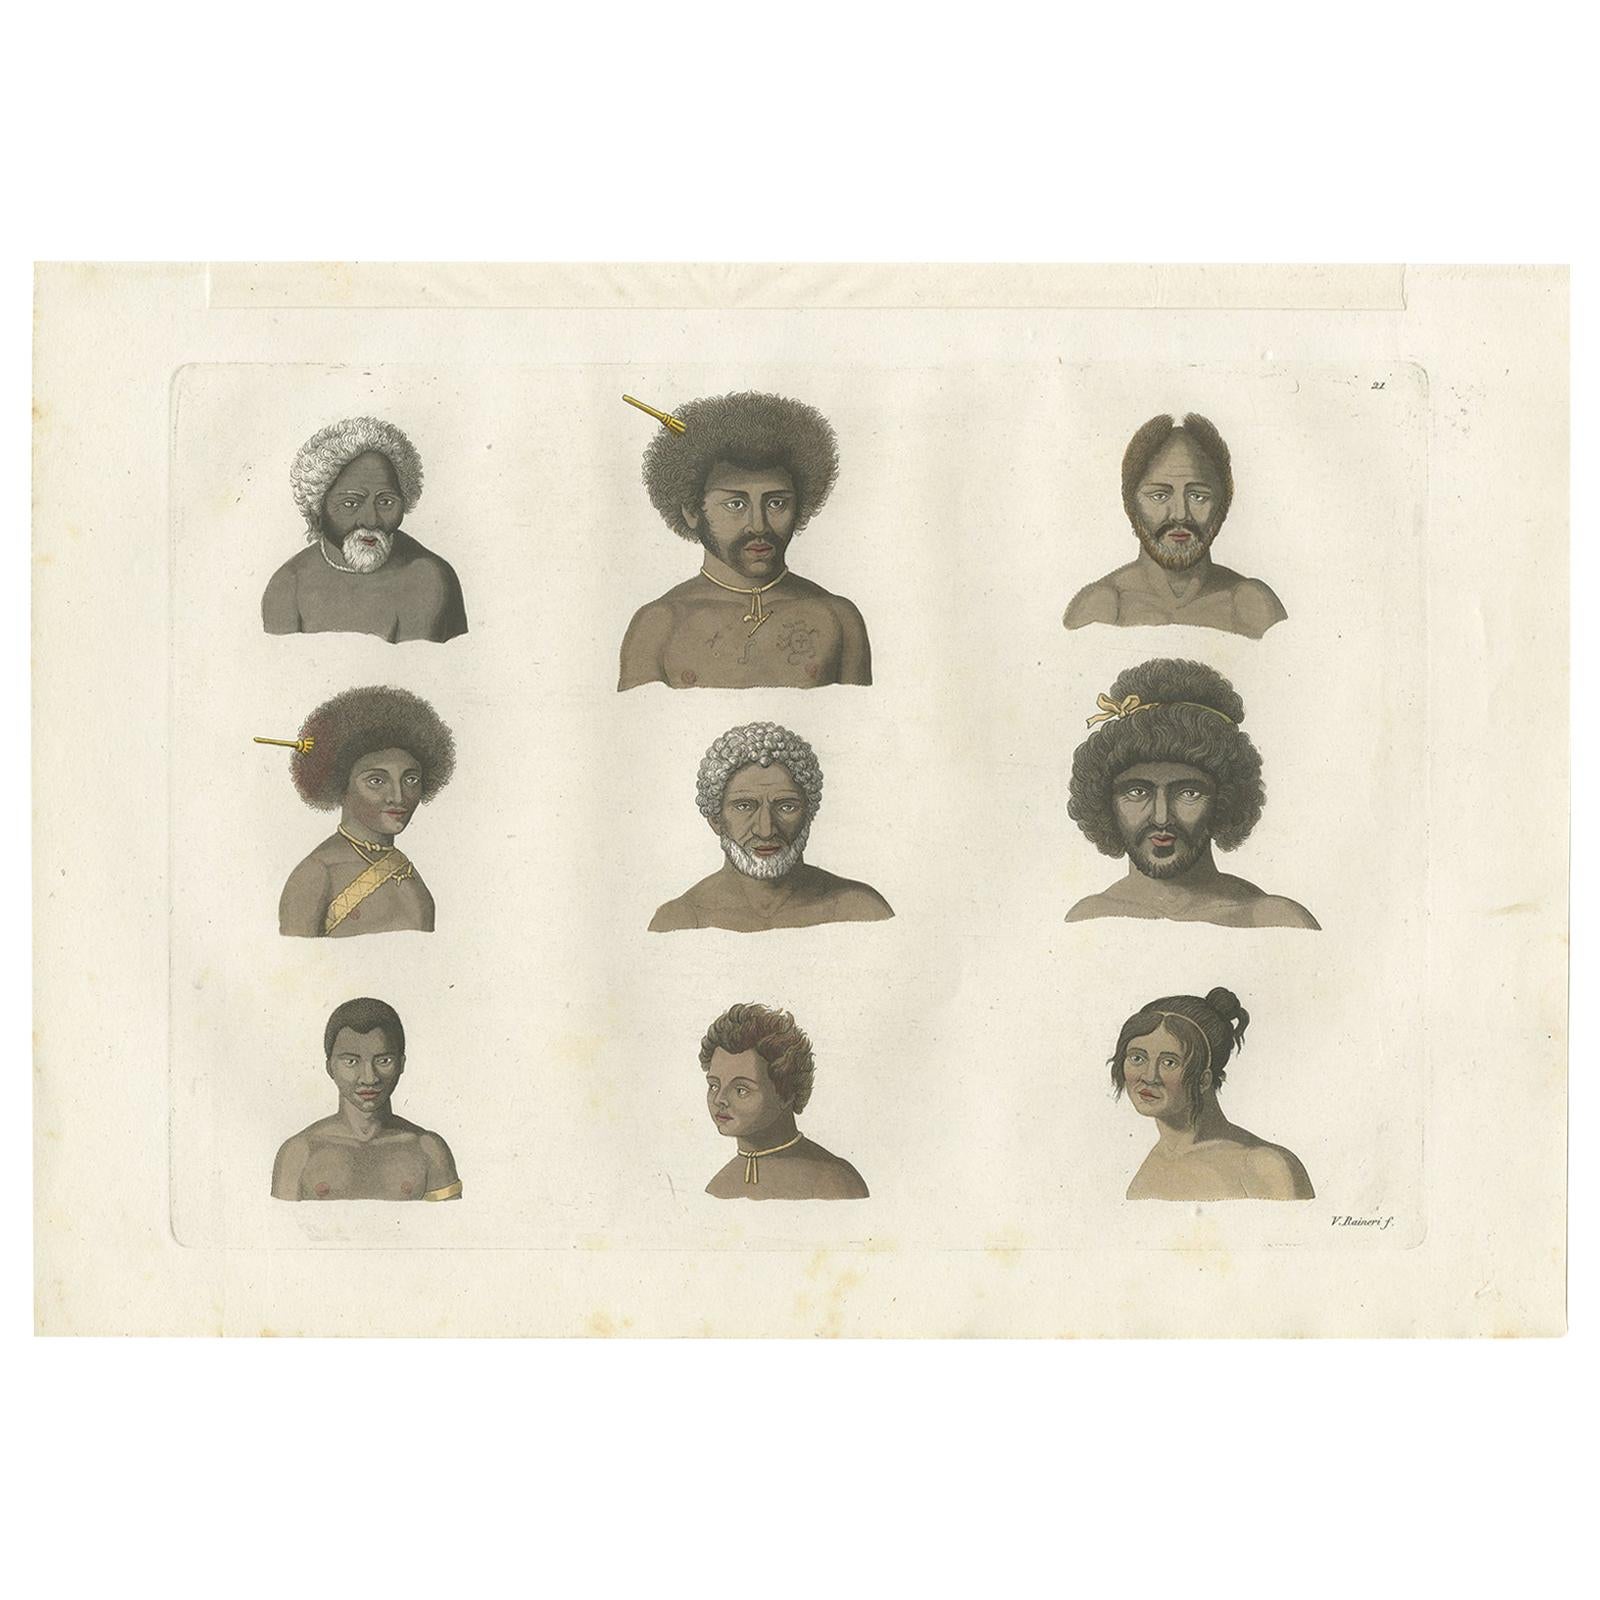 Antique Print of Various Inhabitants of Rawak Island by Ferrario '1831'